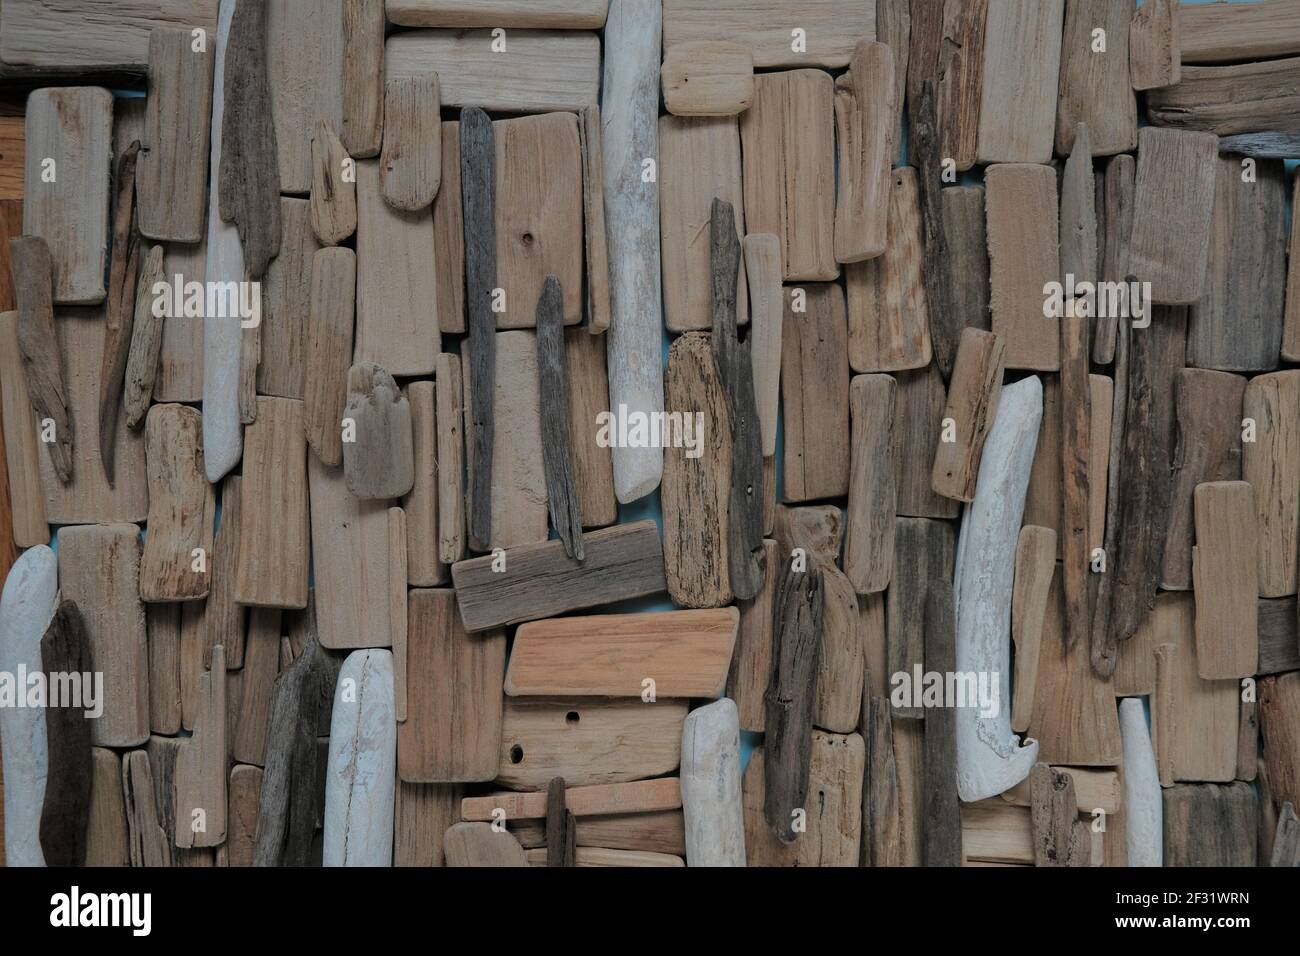 Driftwood wall.beach Driftwood background.Driftwood grigio marino e marrone .pannello decorativo In uno stile marino.Driftwood decor nautico style.Flat lay Foto Stock